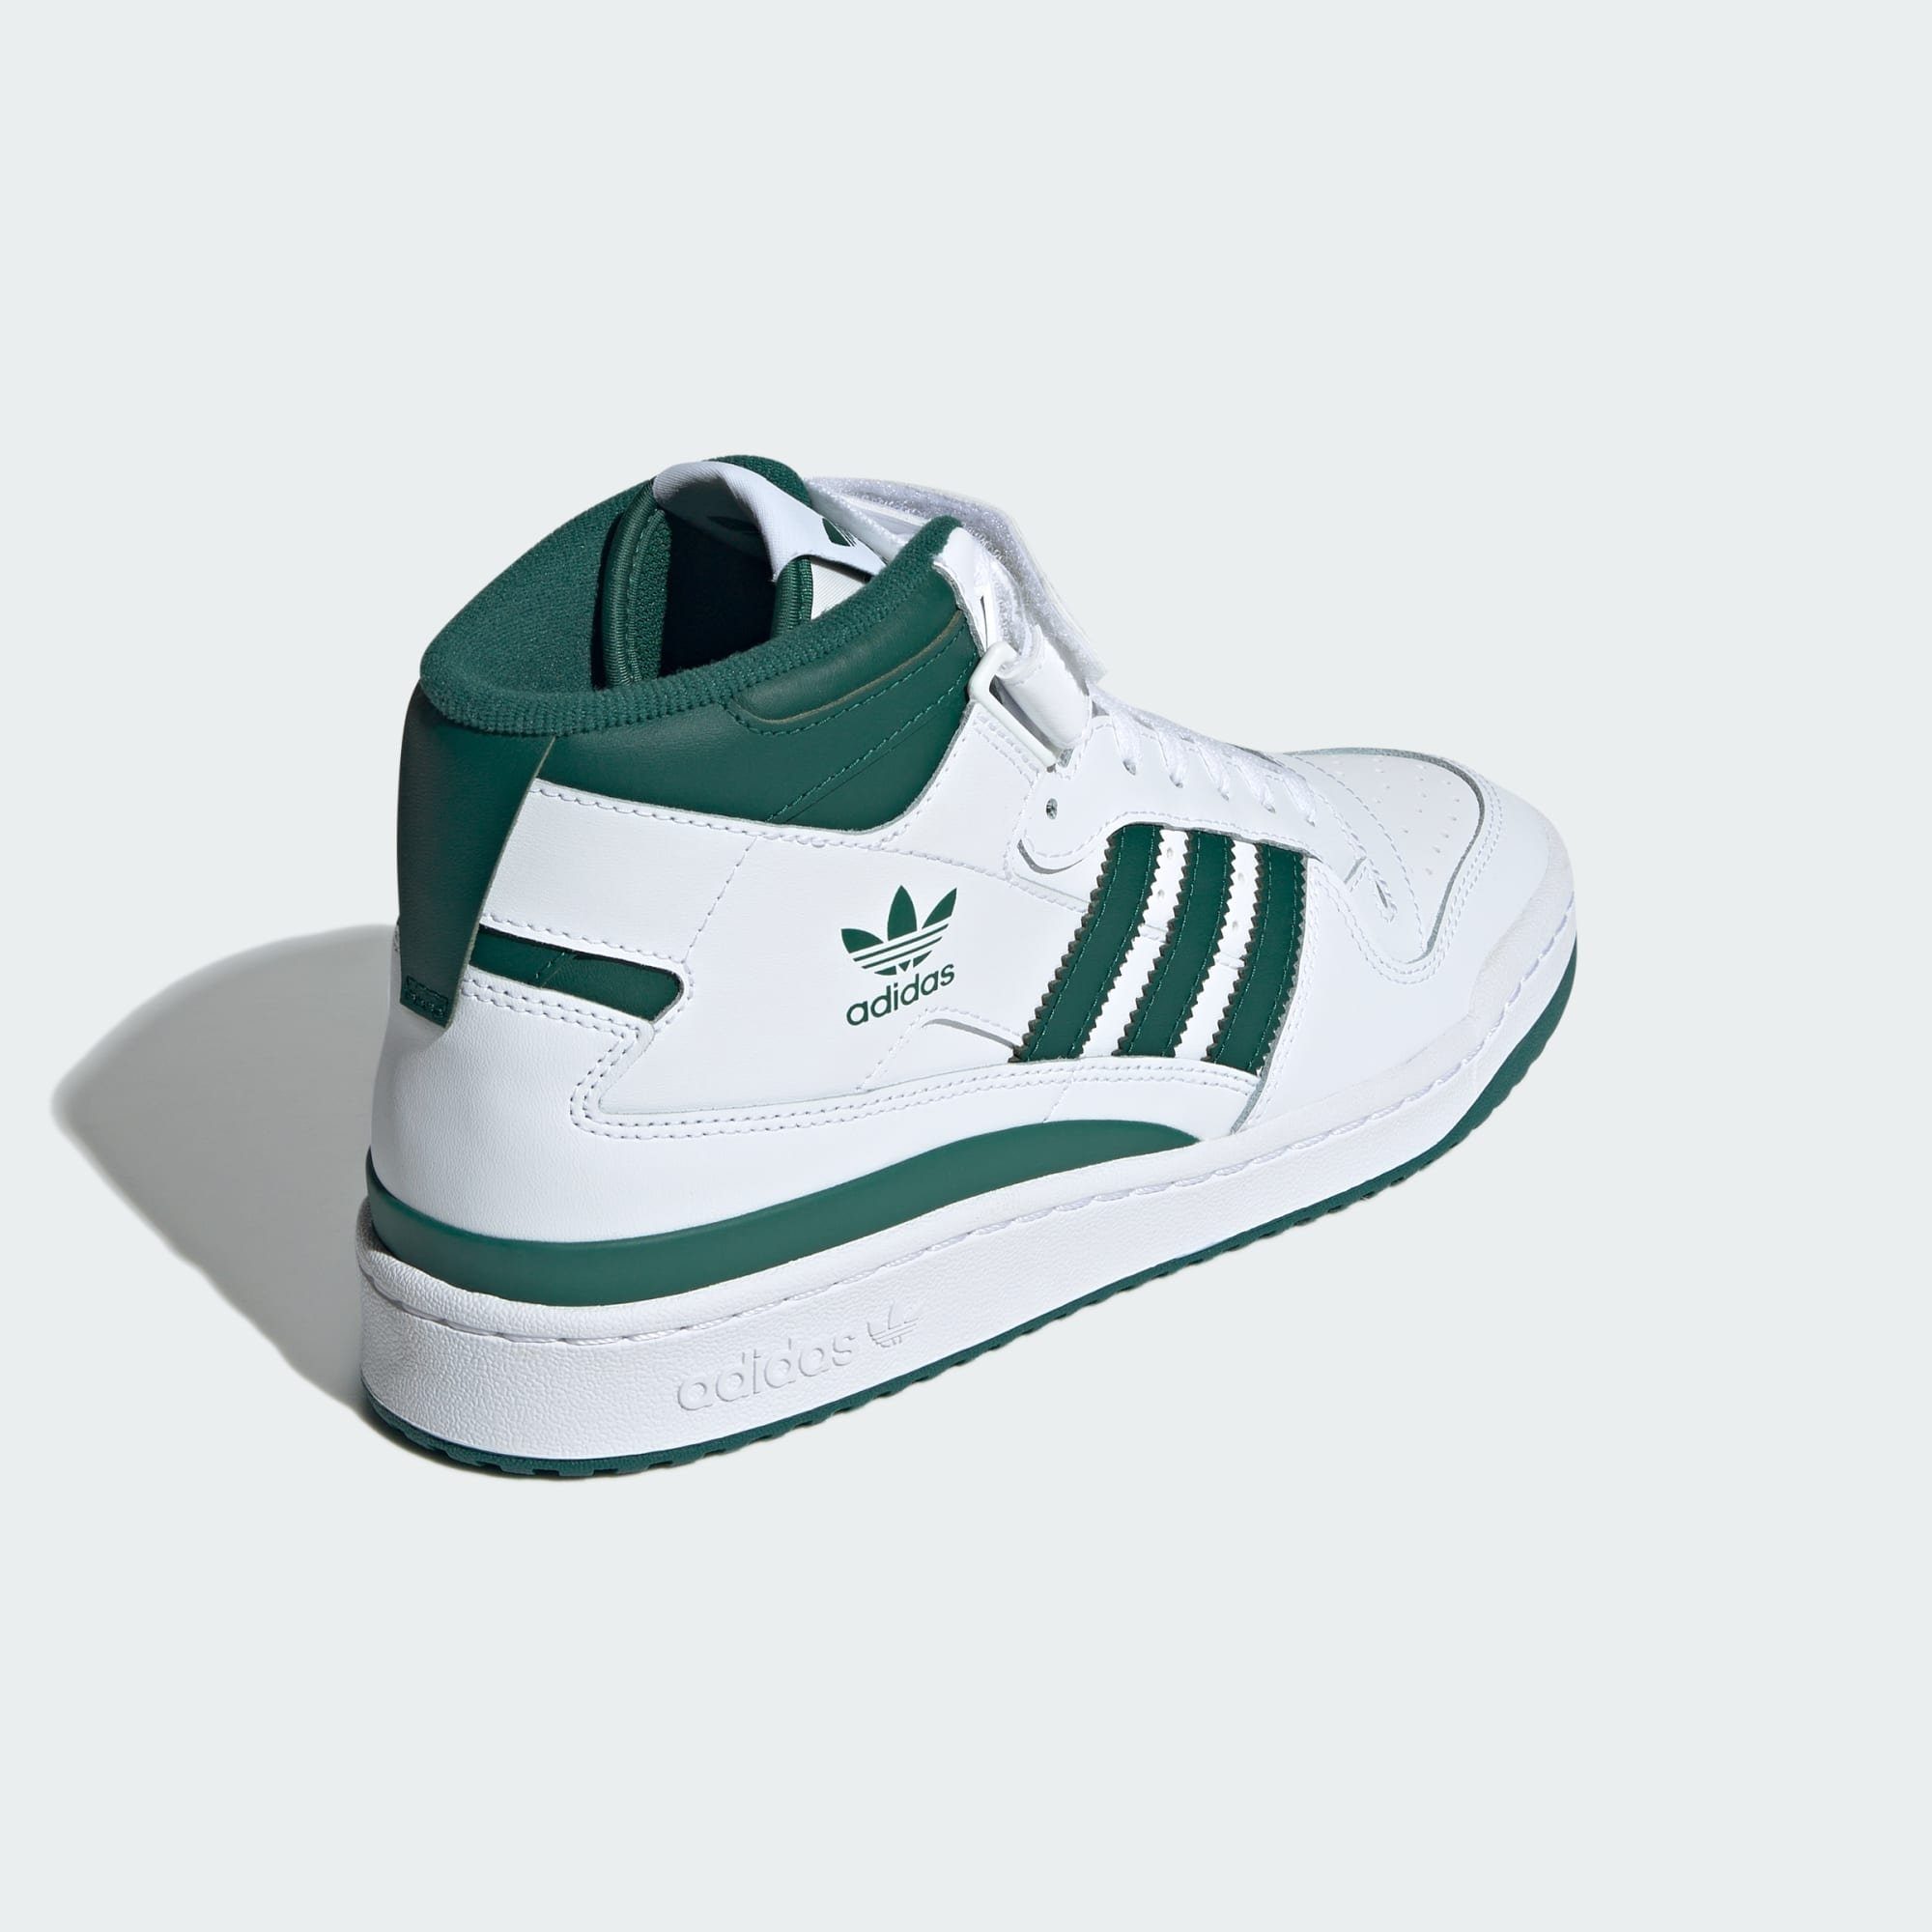 adidas / / Originals Collegiate White SHOES Cloud Sneaker White FORUM Green Cloud MID